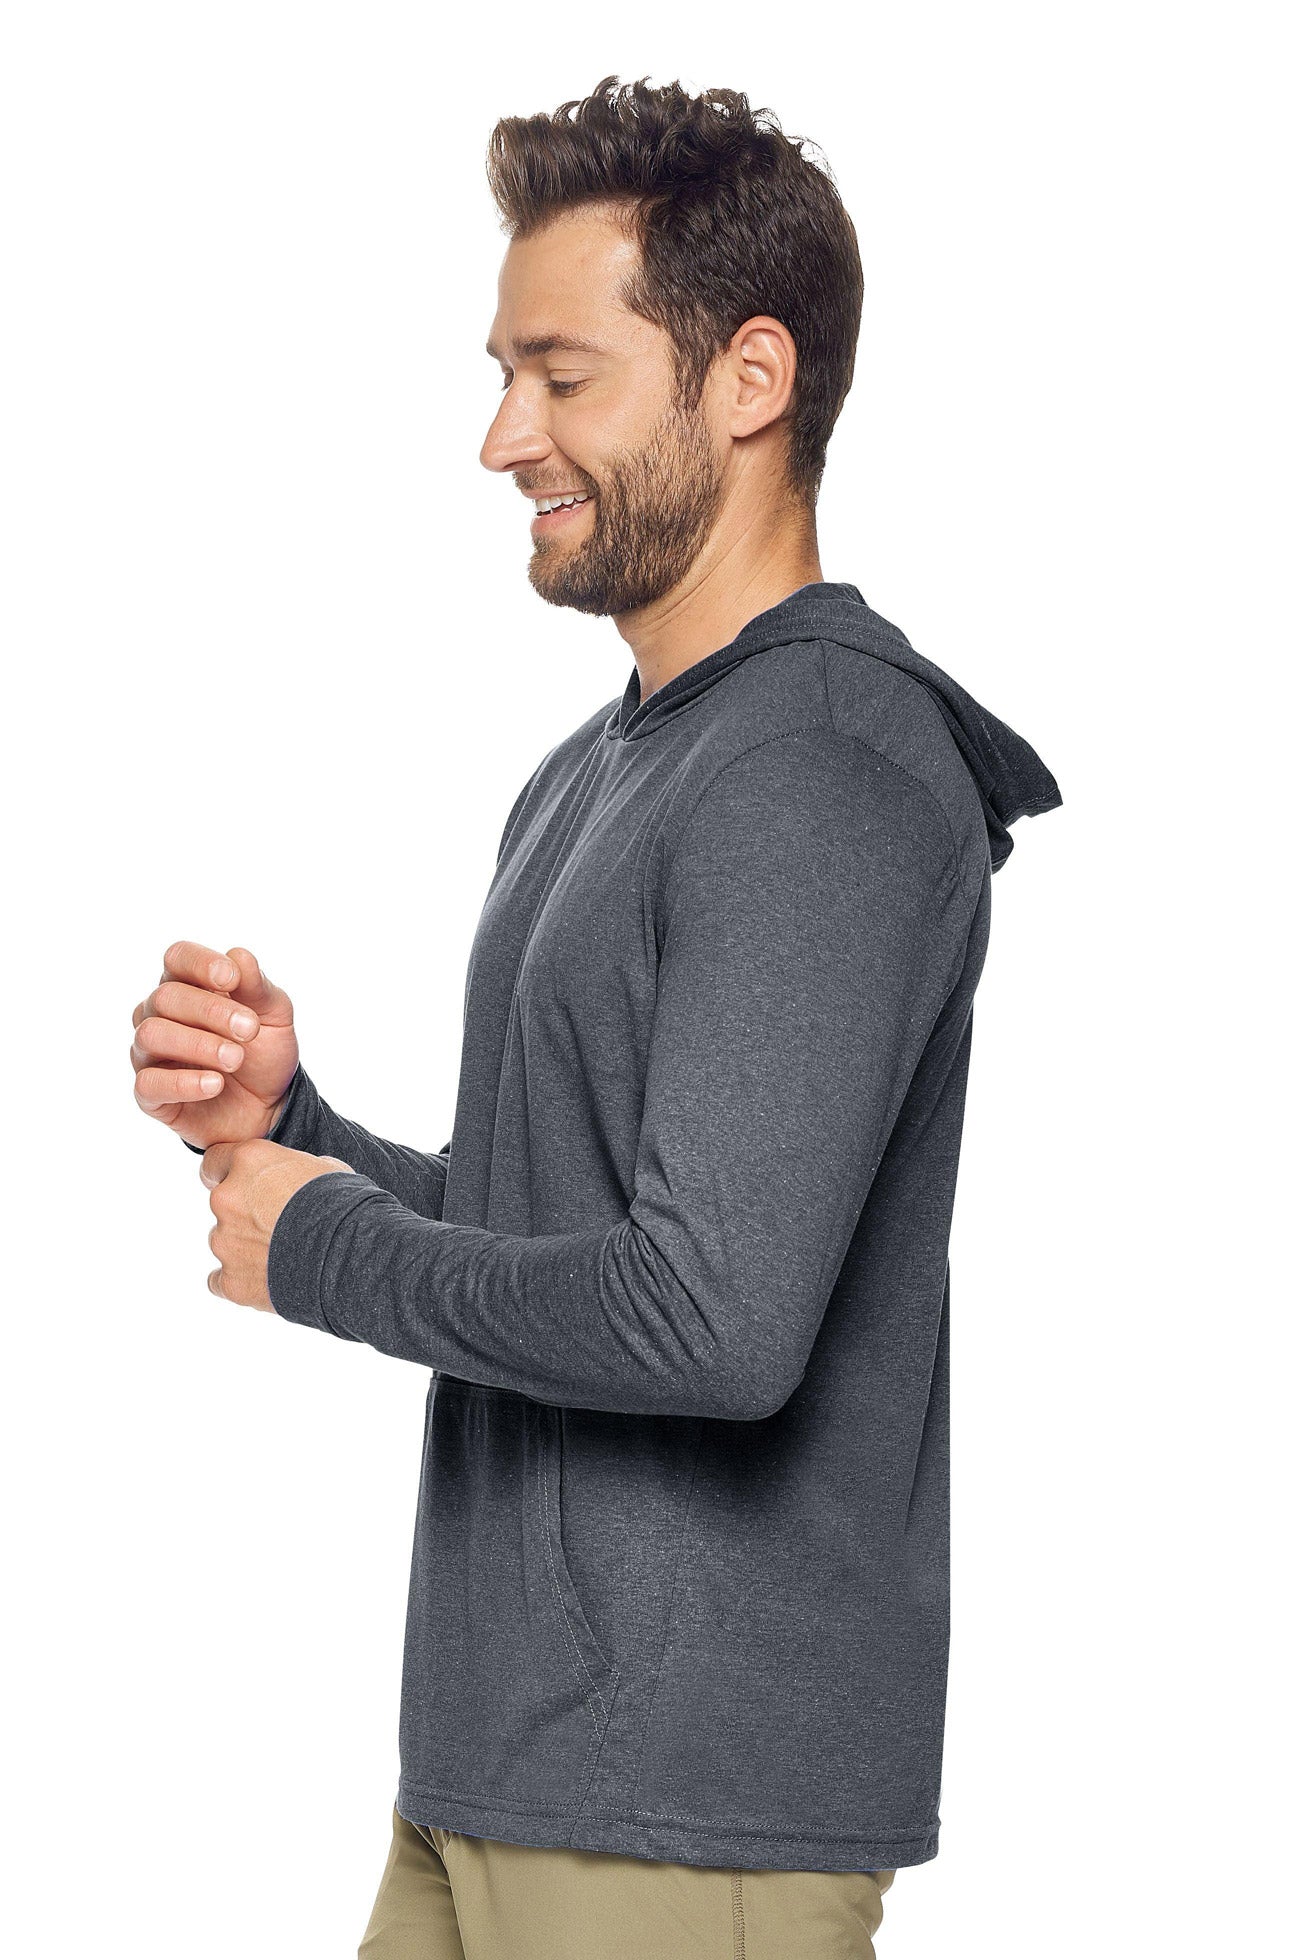 Expert Brand Wholesale Men's Hoodie Performance Active Shirt in Dark Heather Charcoal Gray Image 2#dark-heather-charcoal